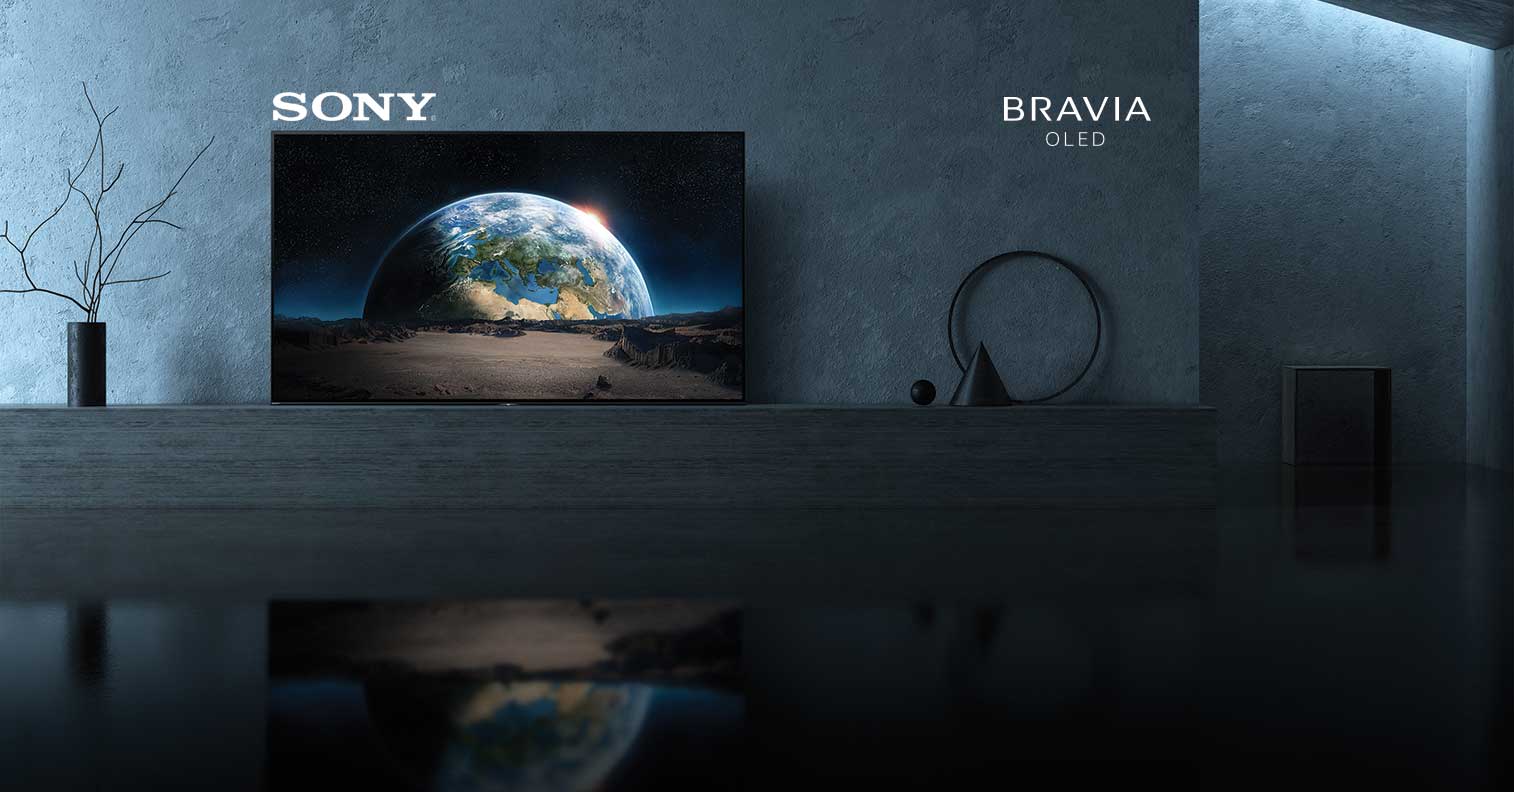 Sony BRAVIA OLED 4K TV Overview